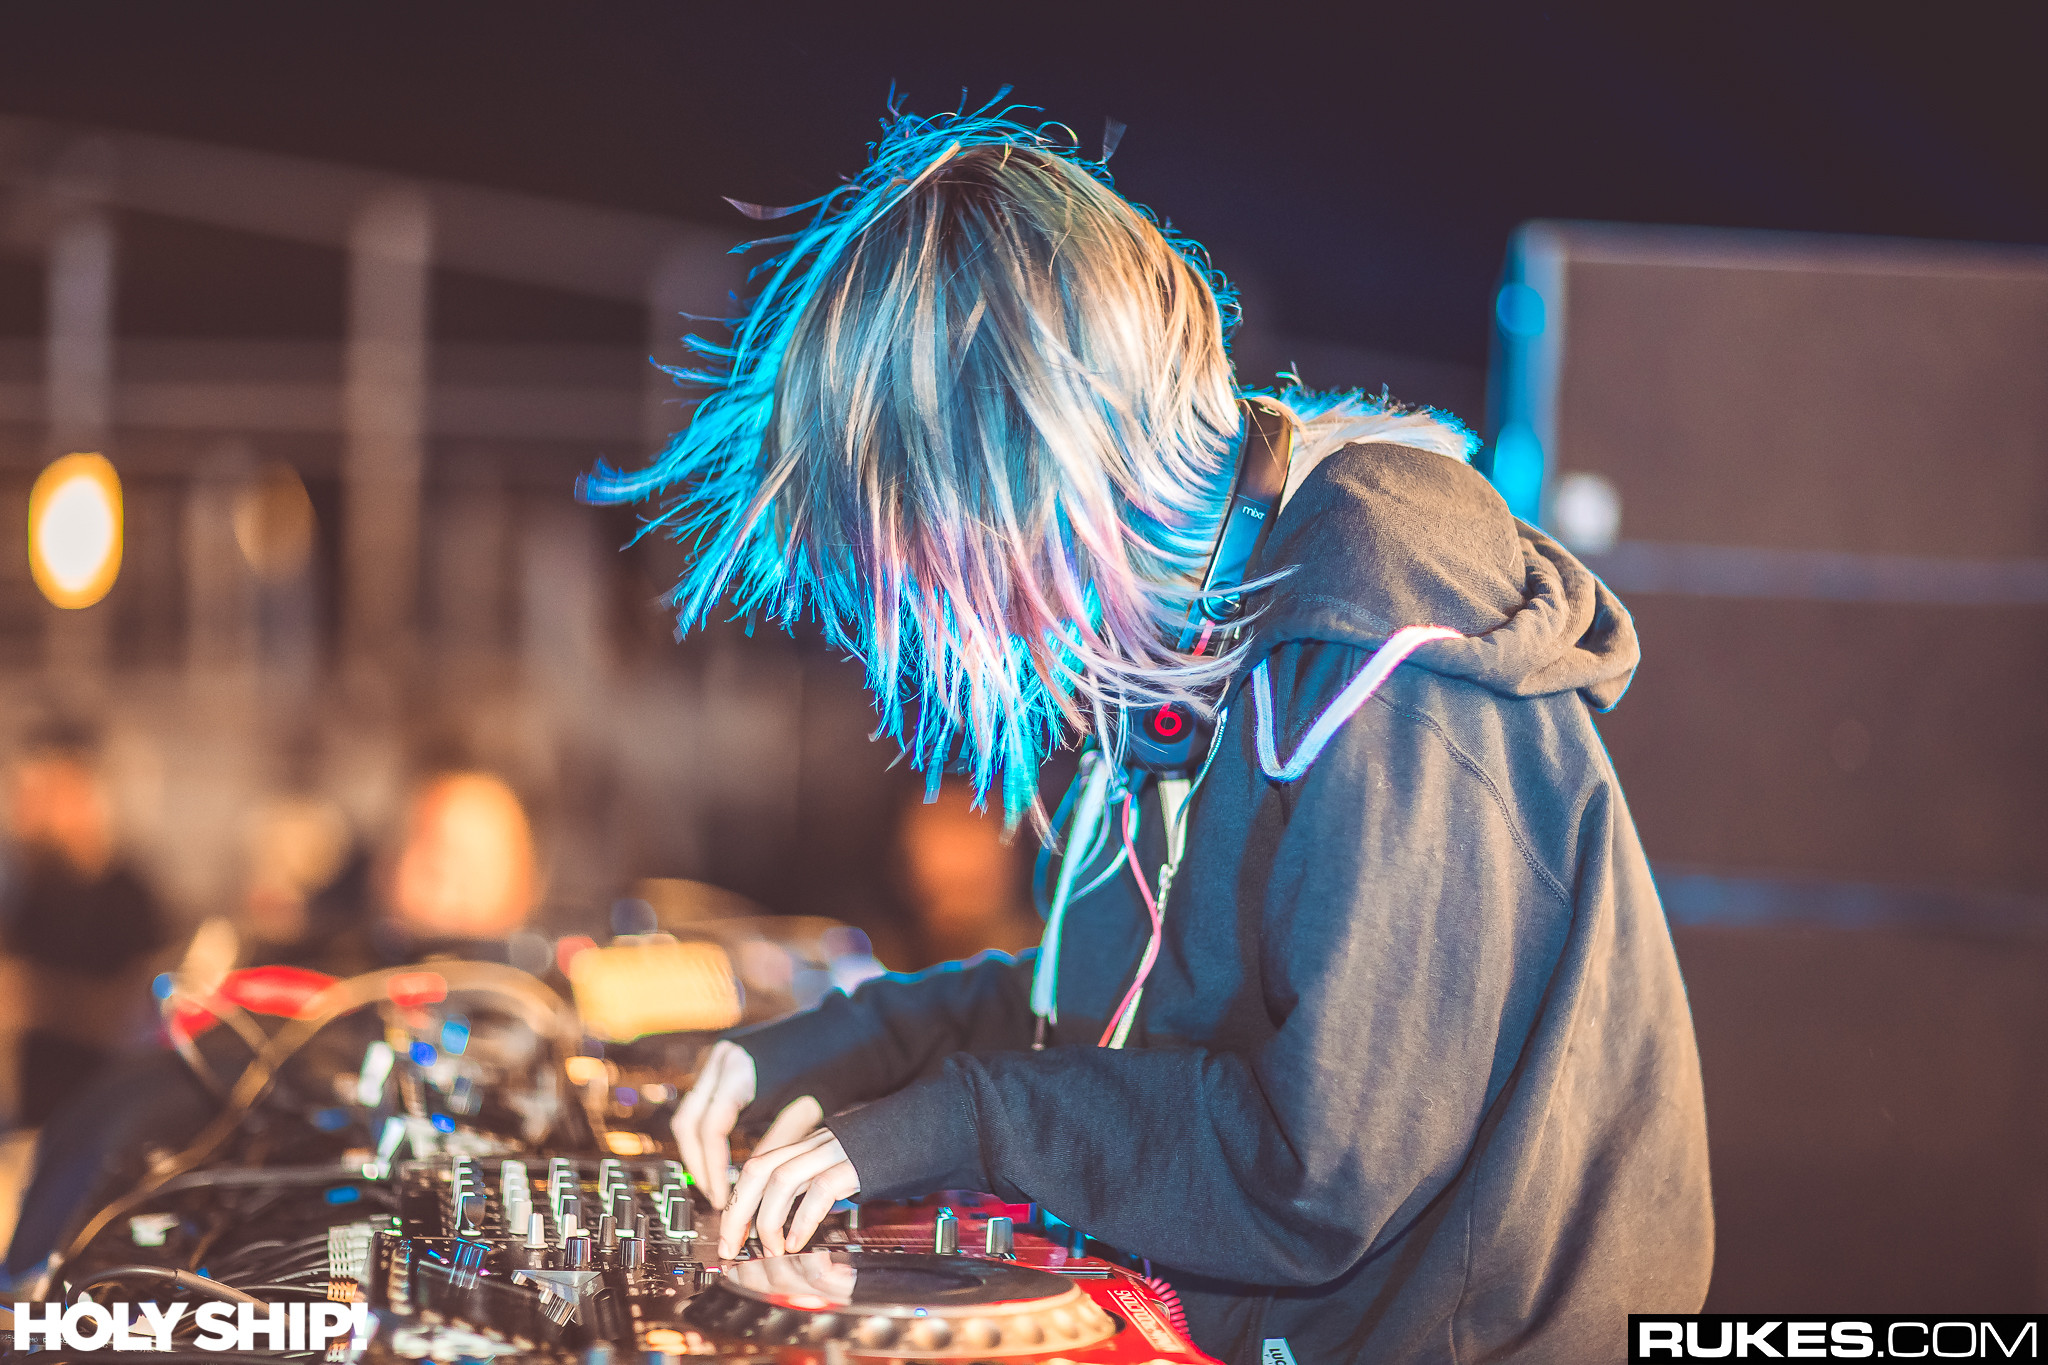 Holy Ship Mija Dyed Hair Rukes DJ Mixing Consoles 2048x1365